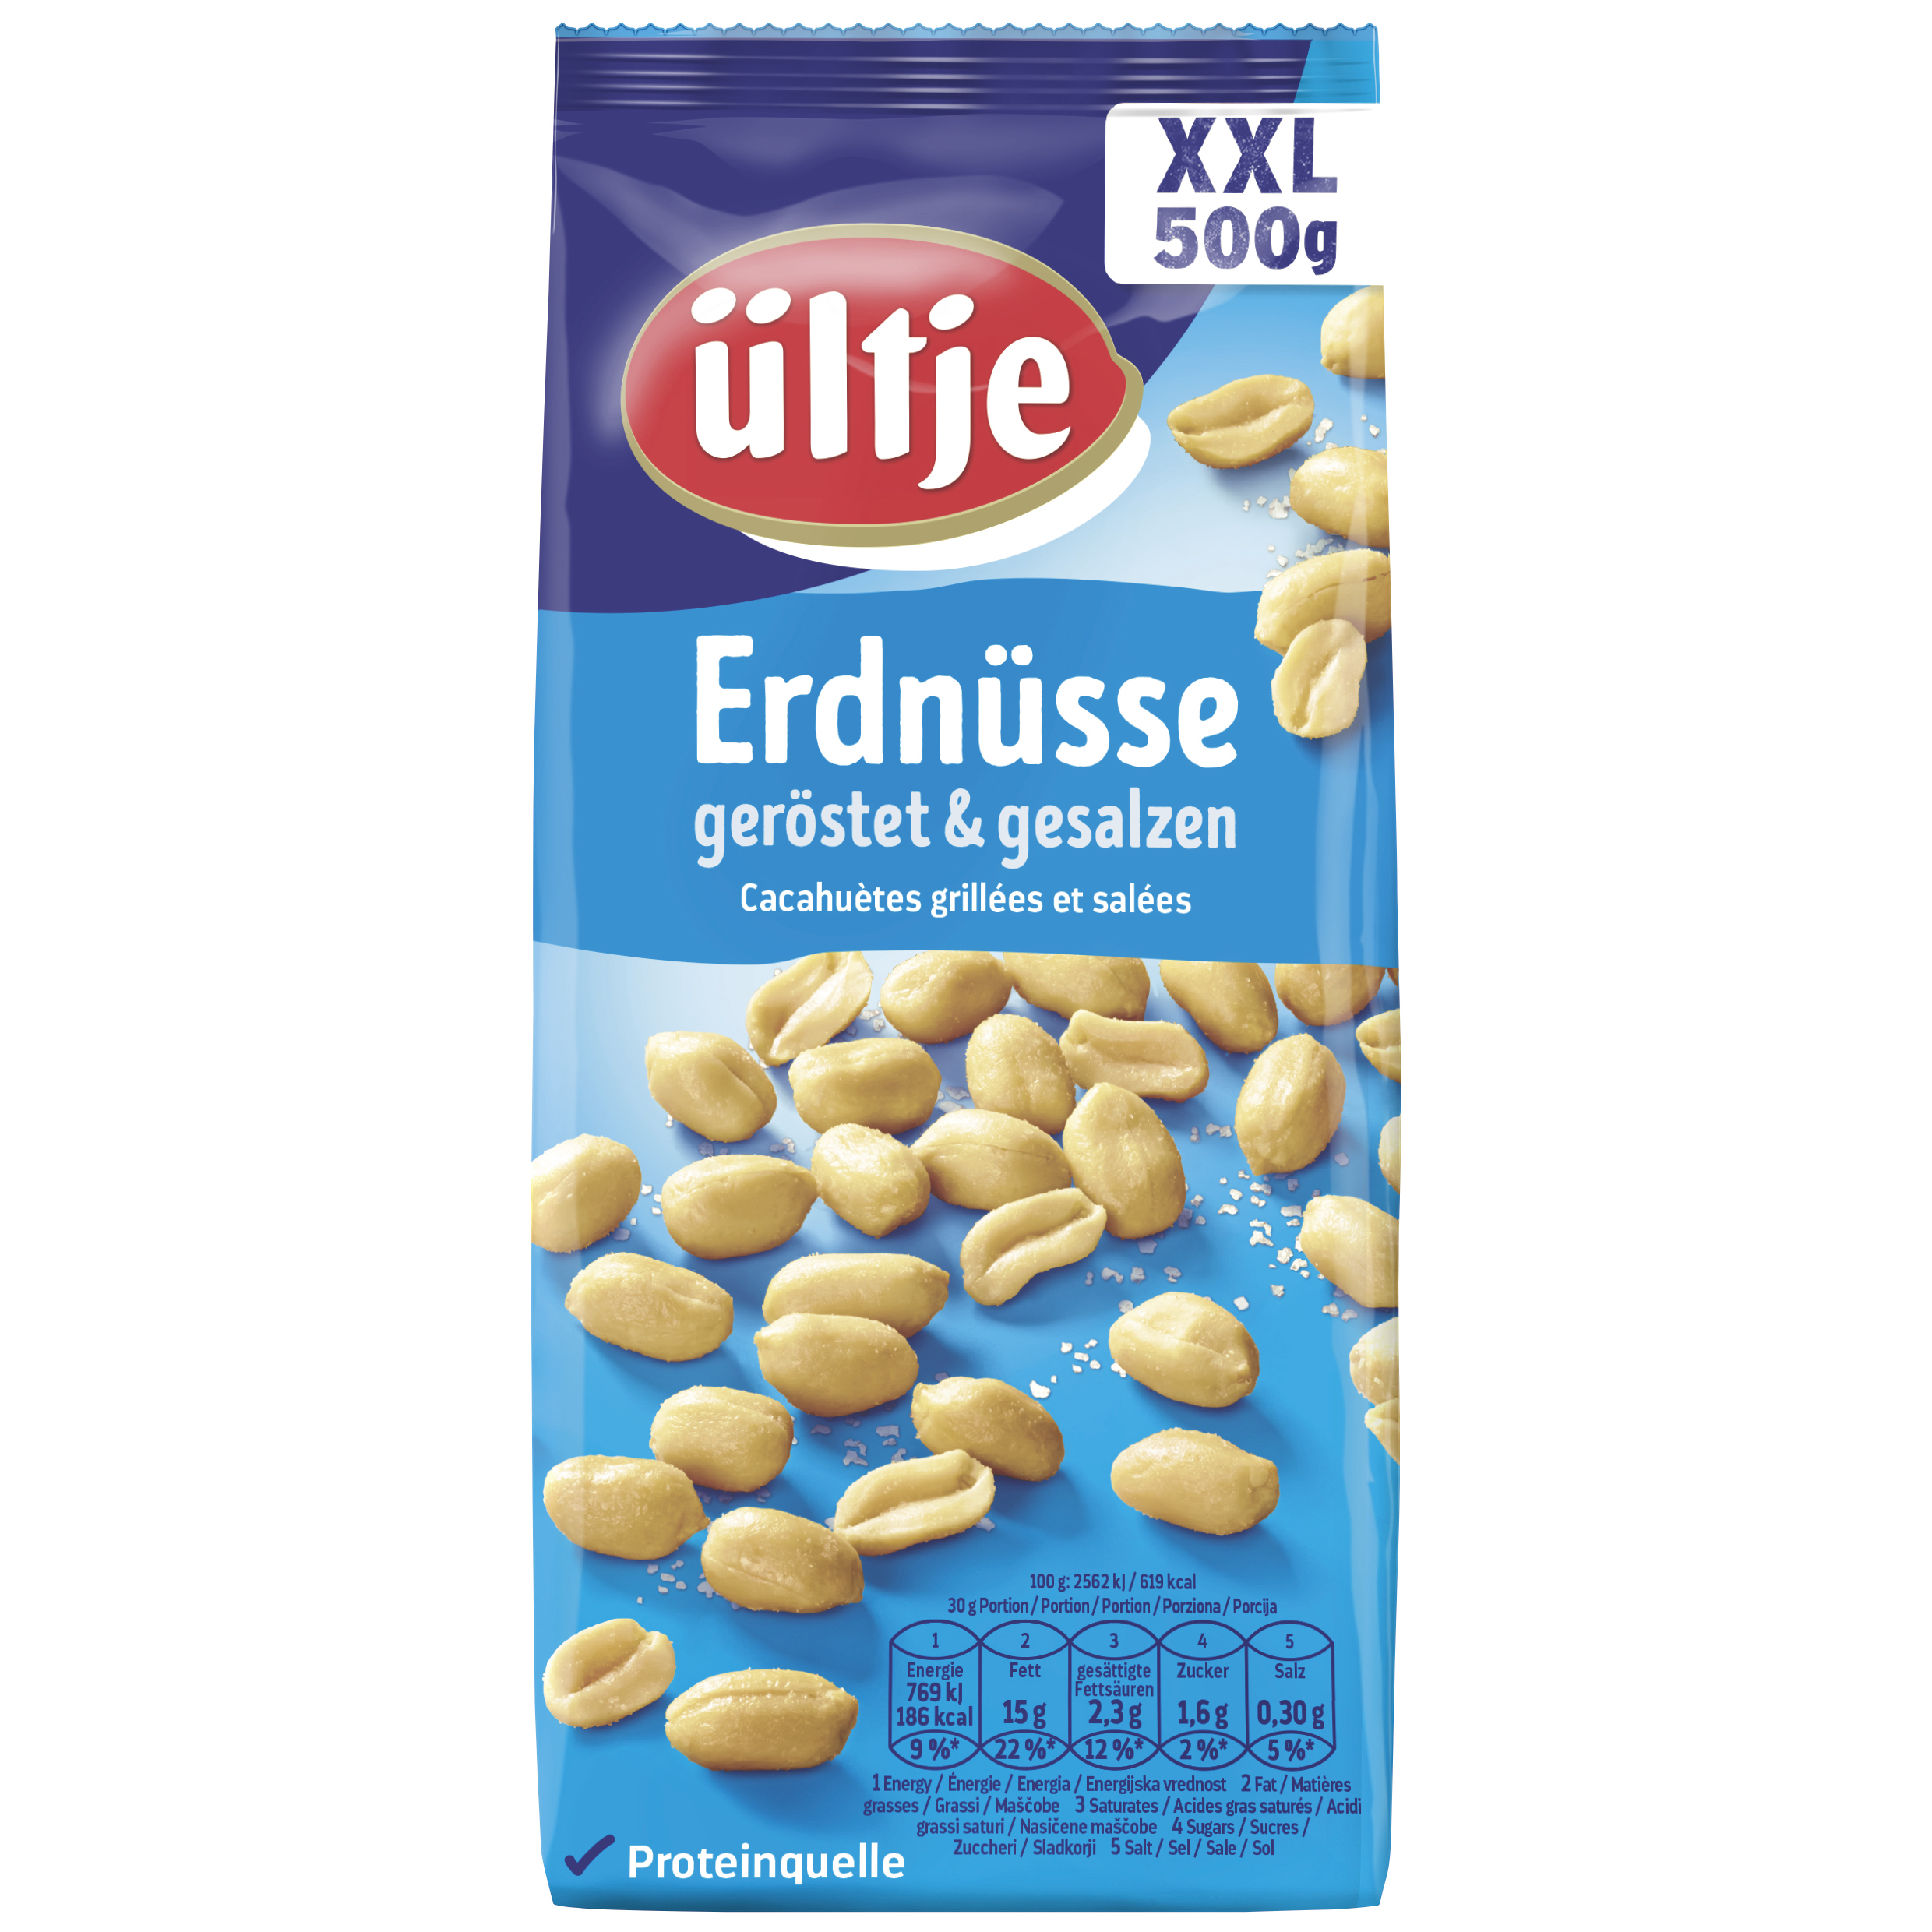 ültje Erdnüsse, geröstet & gesalzen, 500g Beutel